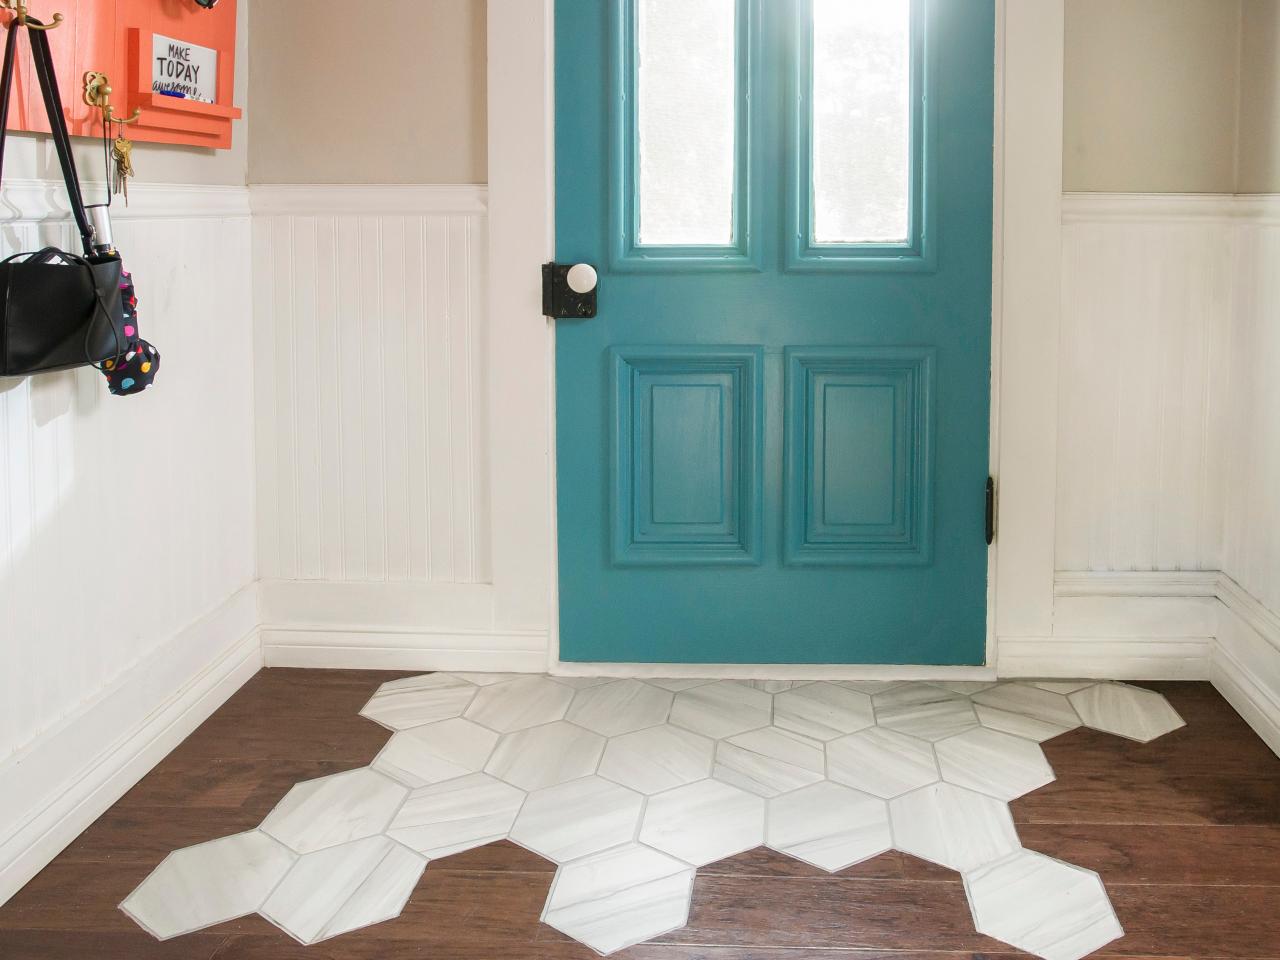 A Tile Rug Within Hardwood Floor, Tile On Wood Floor